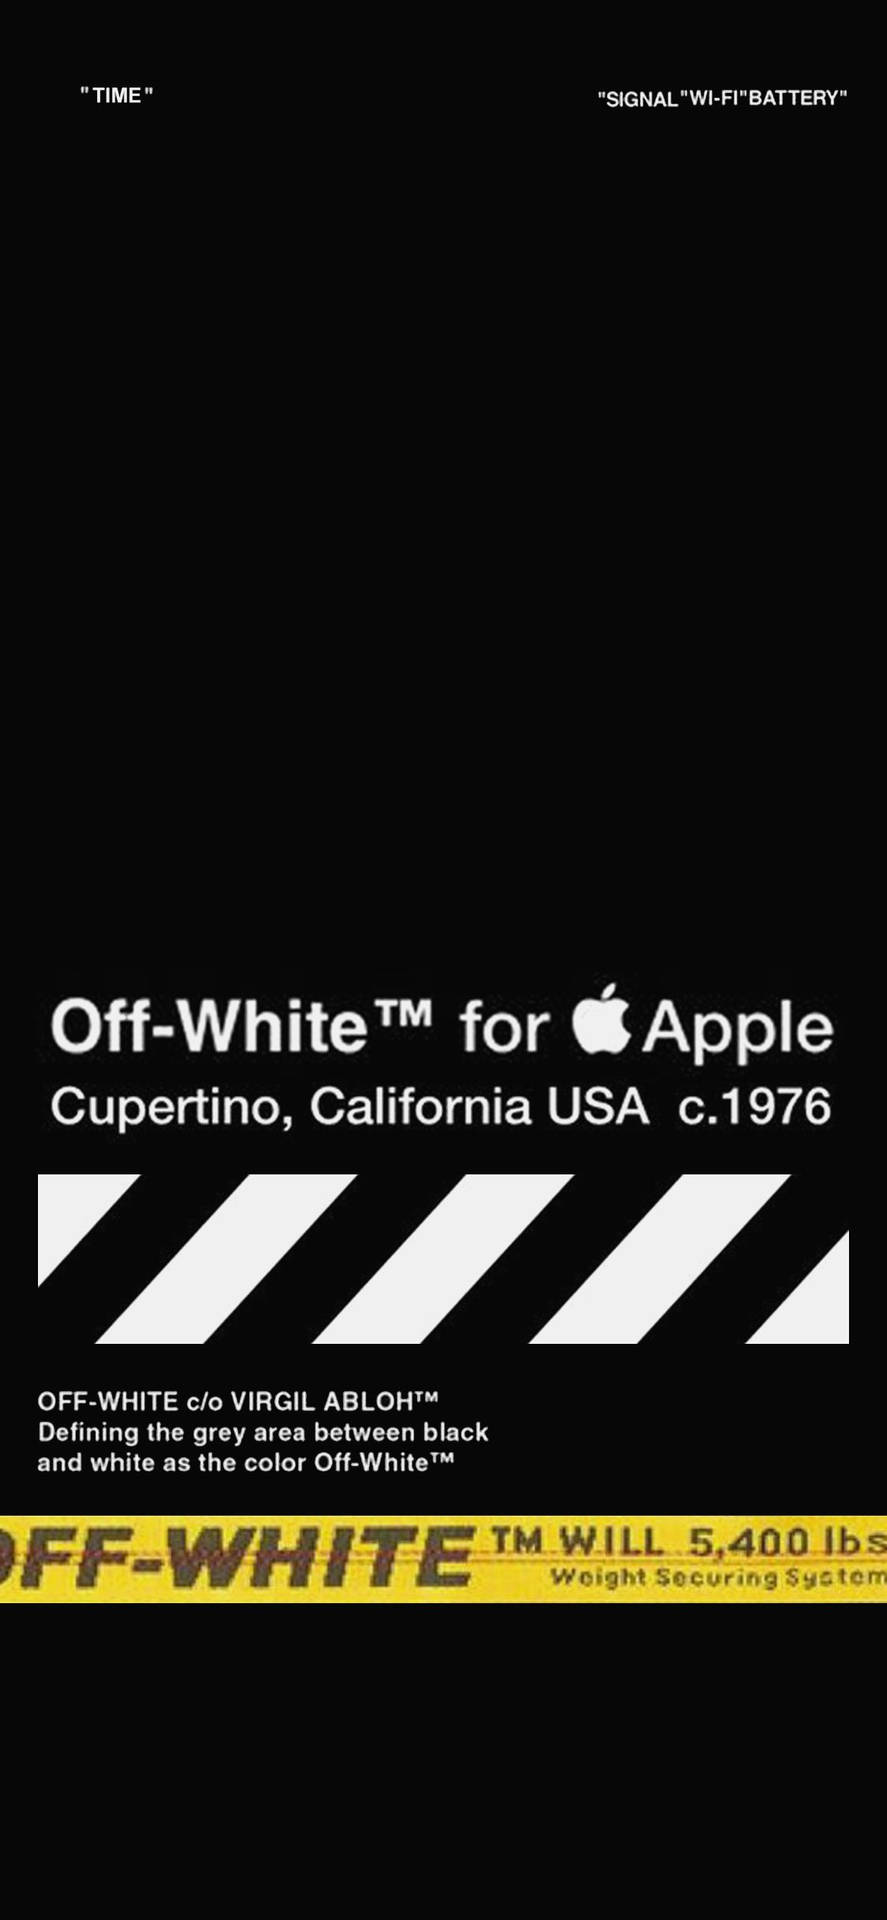 Äppletoff White-logotypen Wallpaper